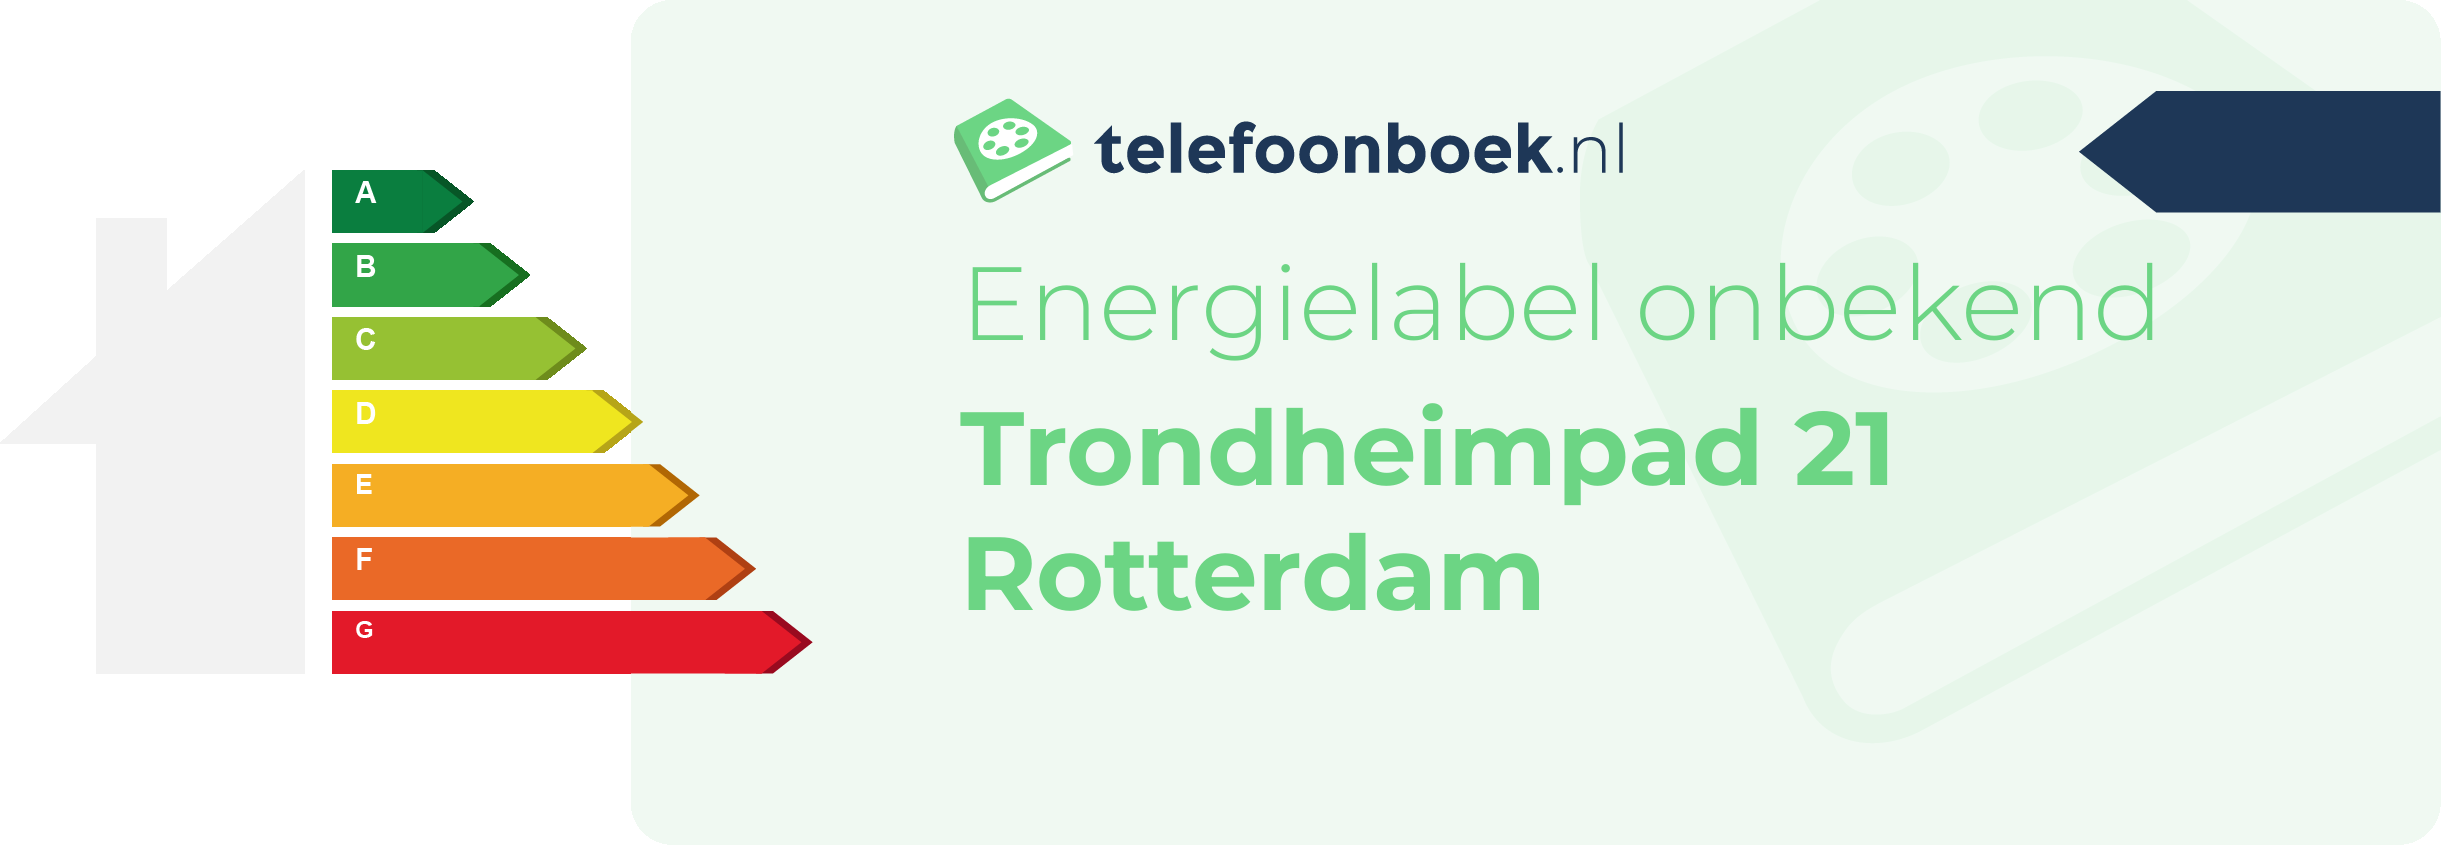 Energielabel Trondheimpad 21 Rotterdam